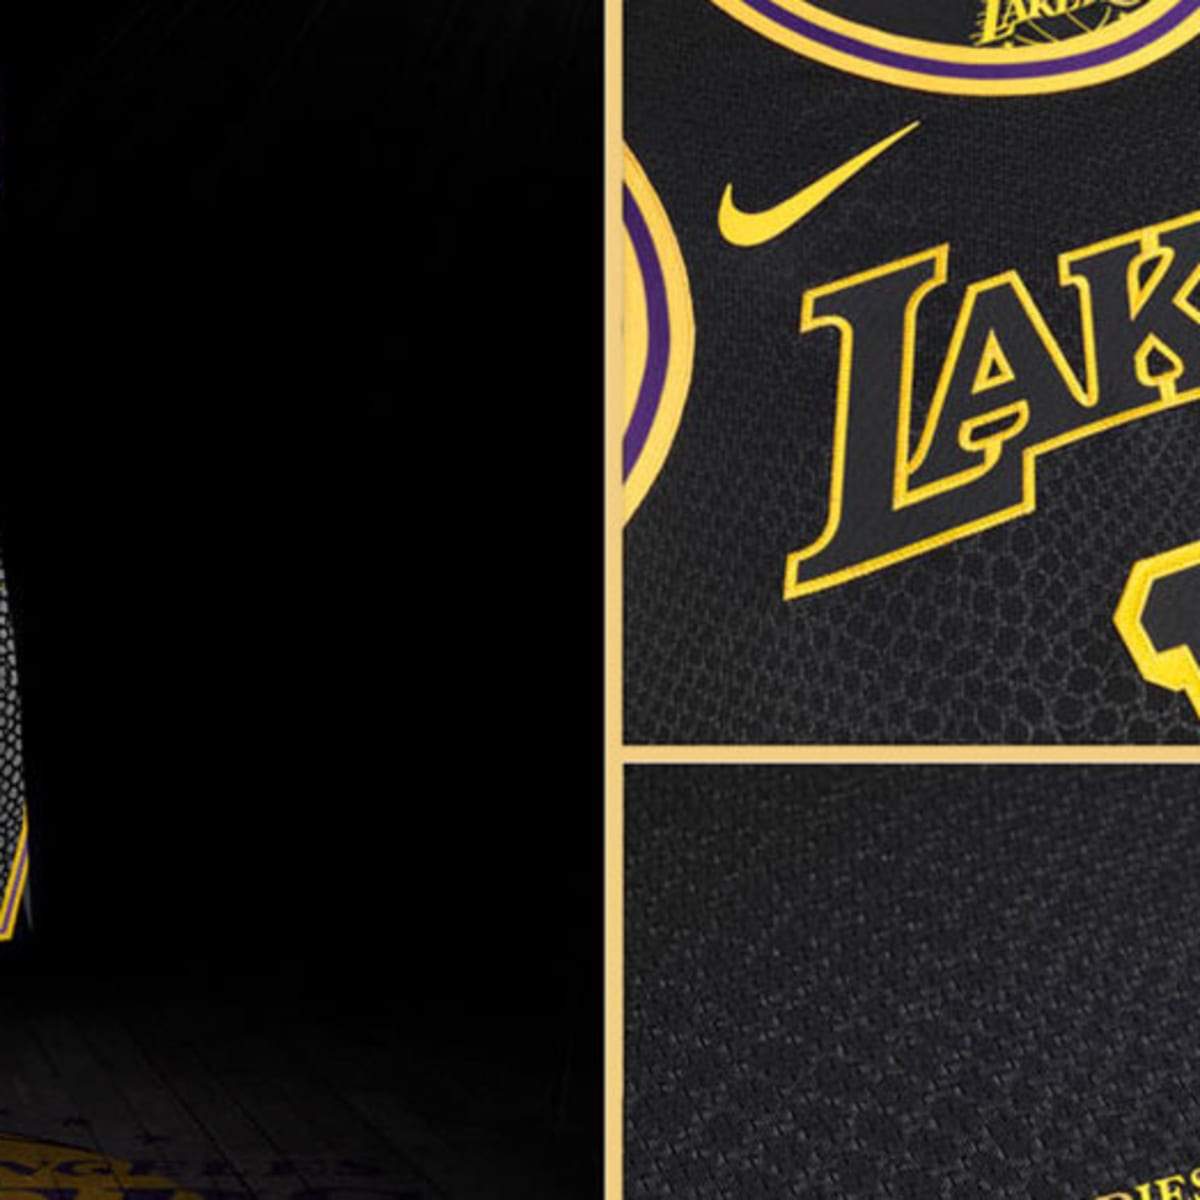 Splash Design on Instagram: “Should the lakers bring back these 'Black  Mamba' jerseys?”